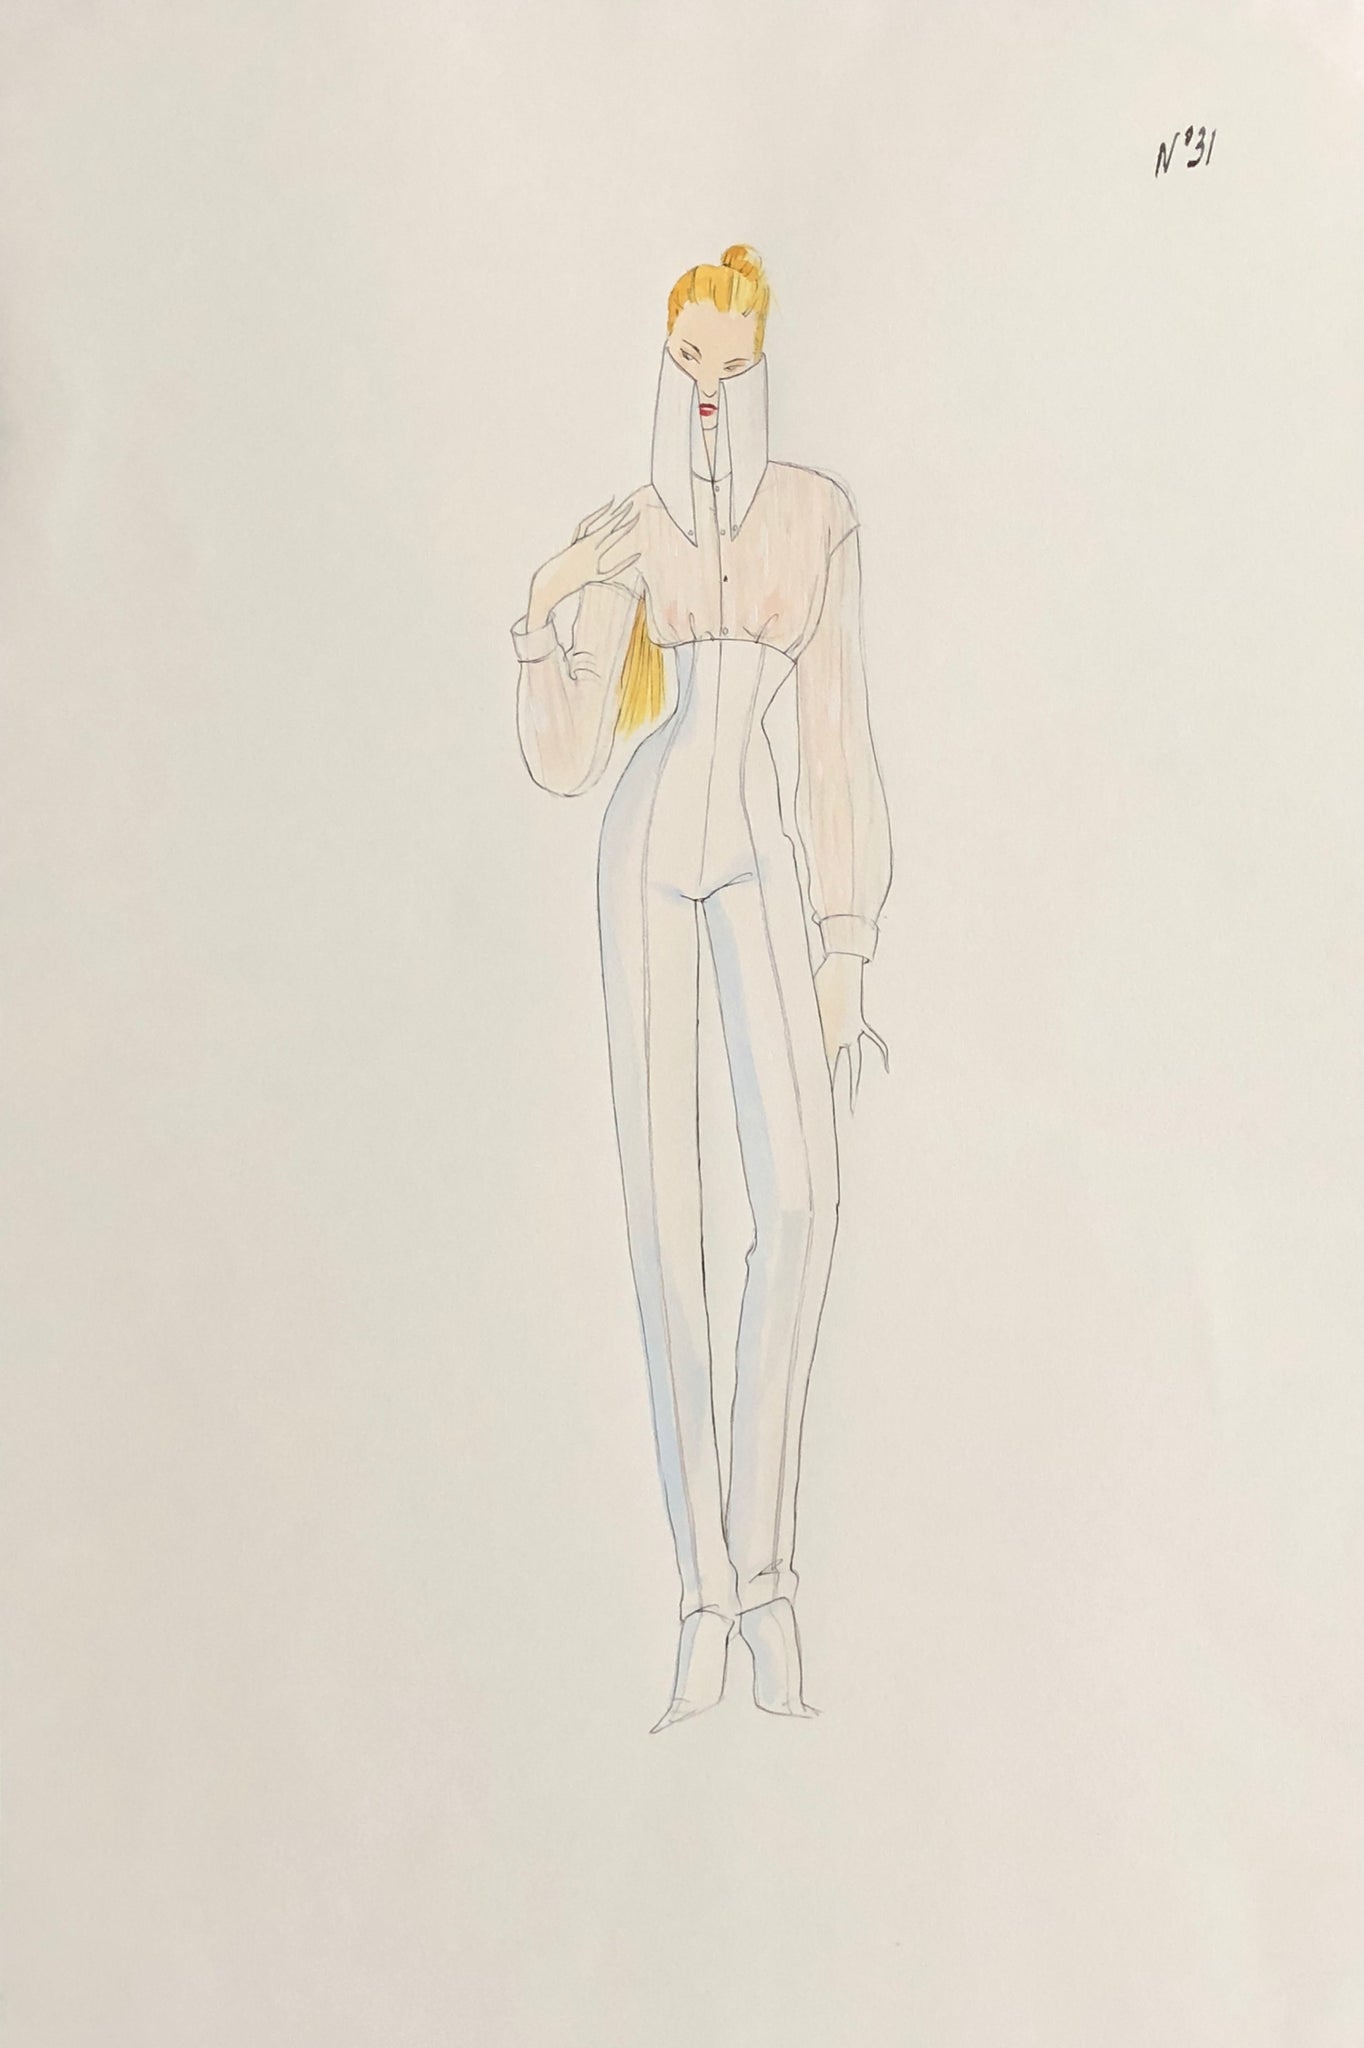 McQueen, Lee Alexander. (1969 - 2010) Design for his First Givenchy Haute Couture Collection (organza blouse ensemble) - Spring-Summer, 1997